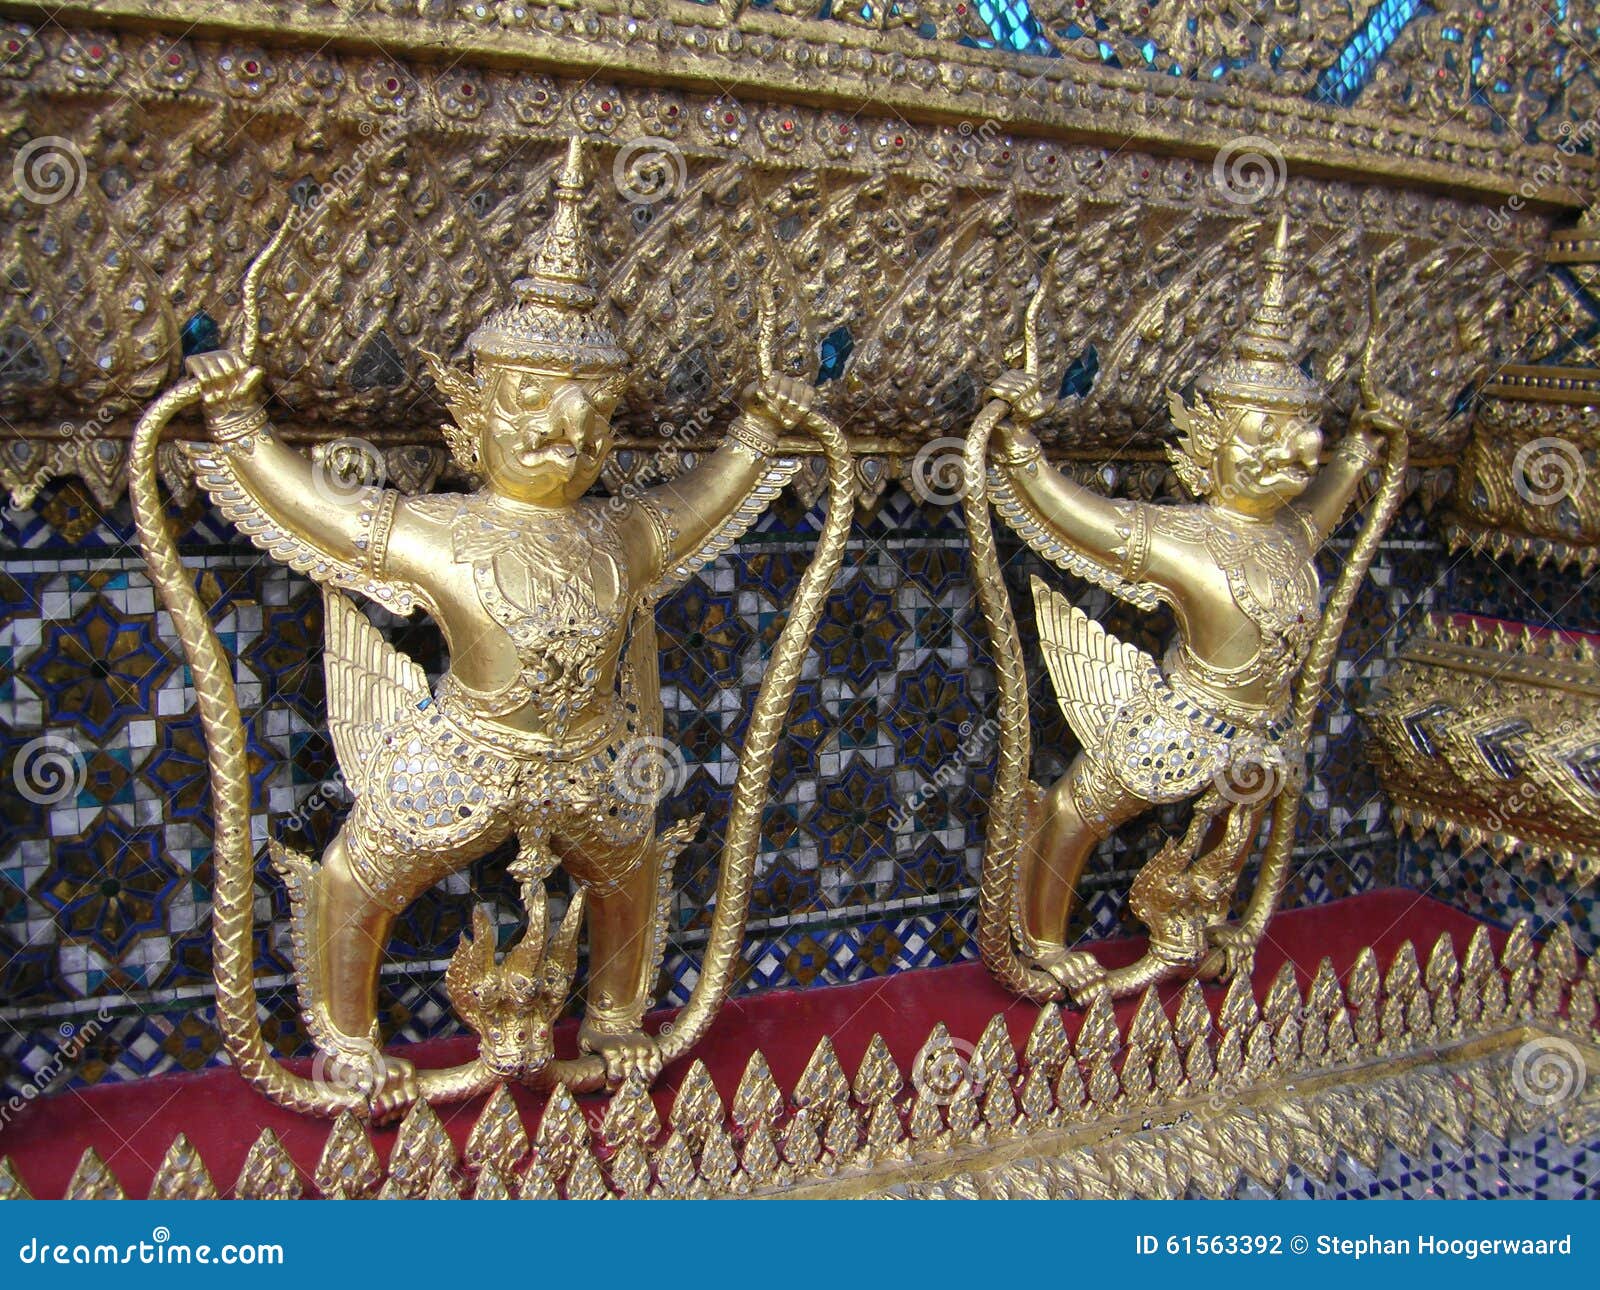 demon guardian, wat phra keaw, bangkok, thailand